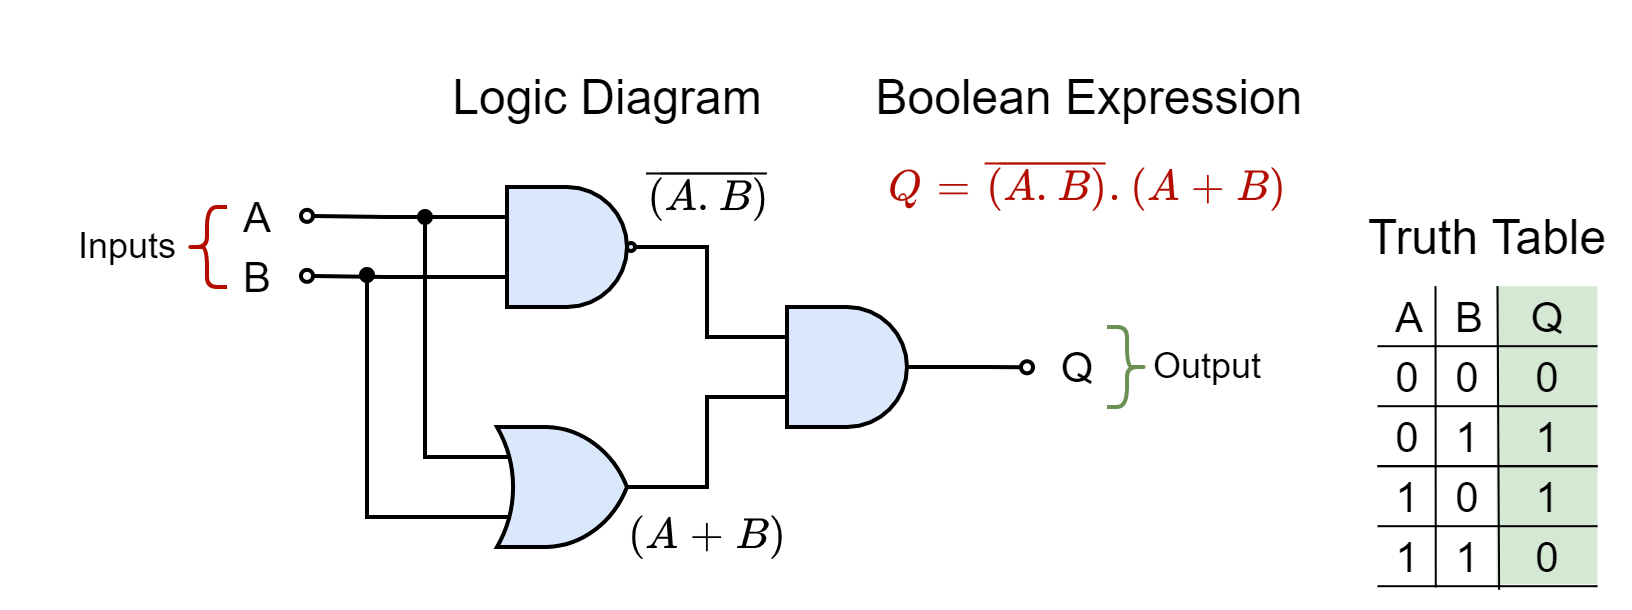 Representation methods of combinational logic